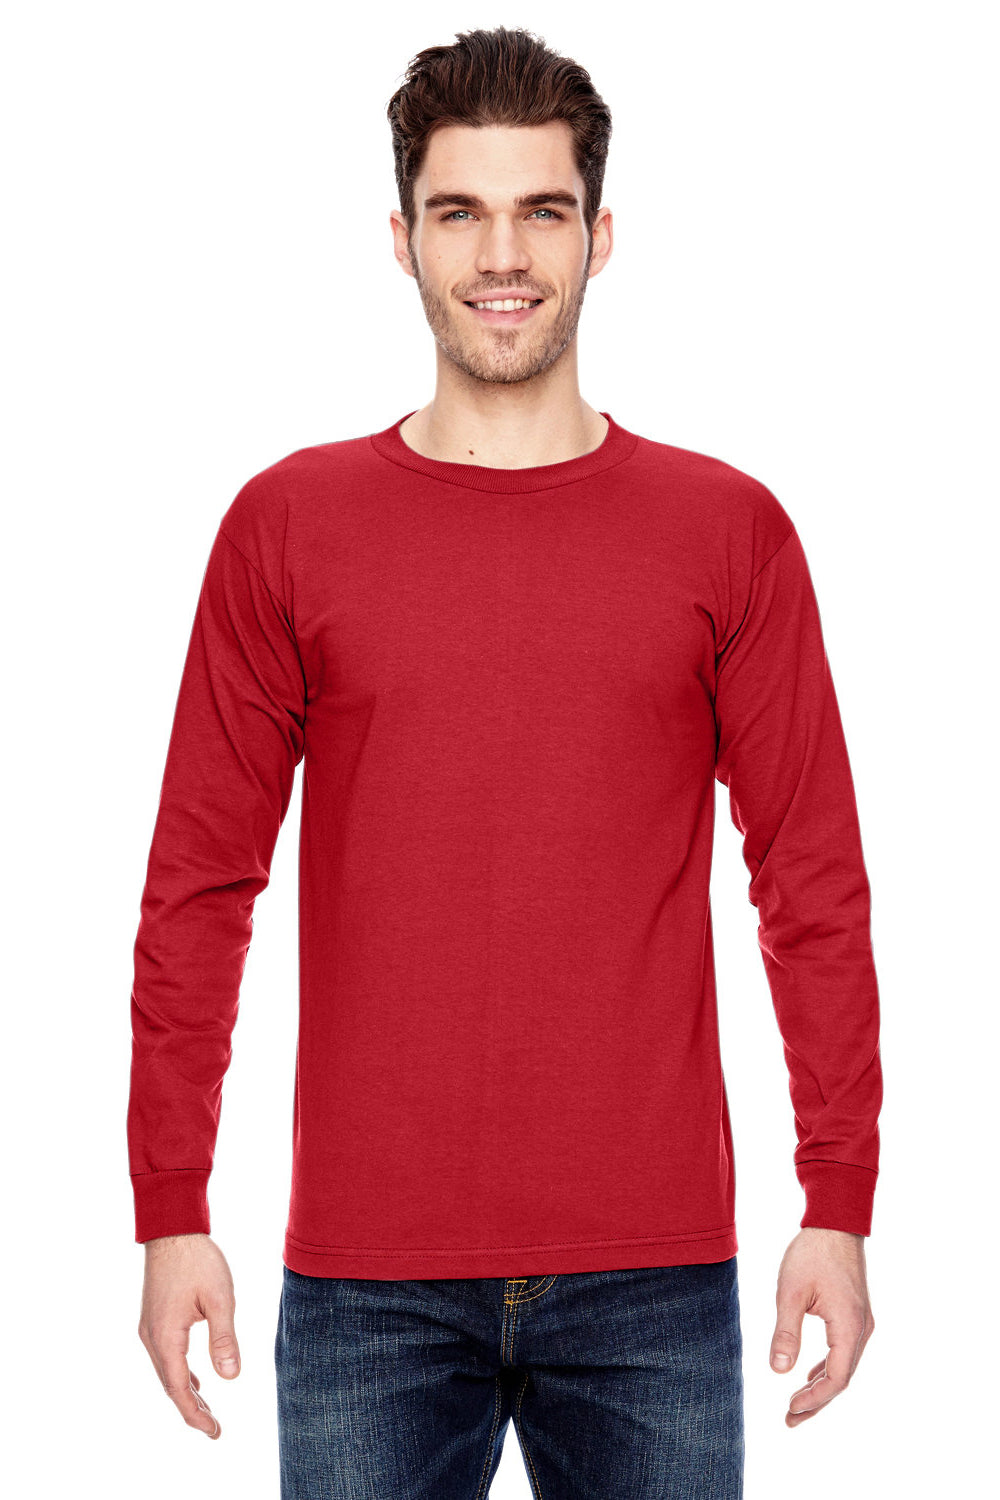 Bayside BA6100 Mens USA Made Long Sleeve Crewneck T-Shirt Red Model Front